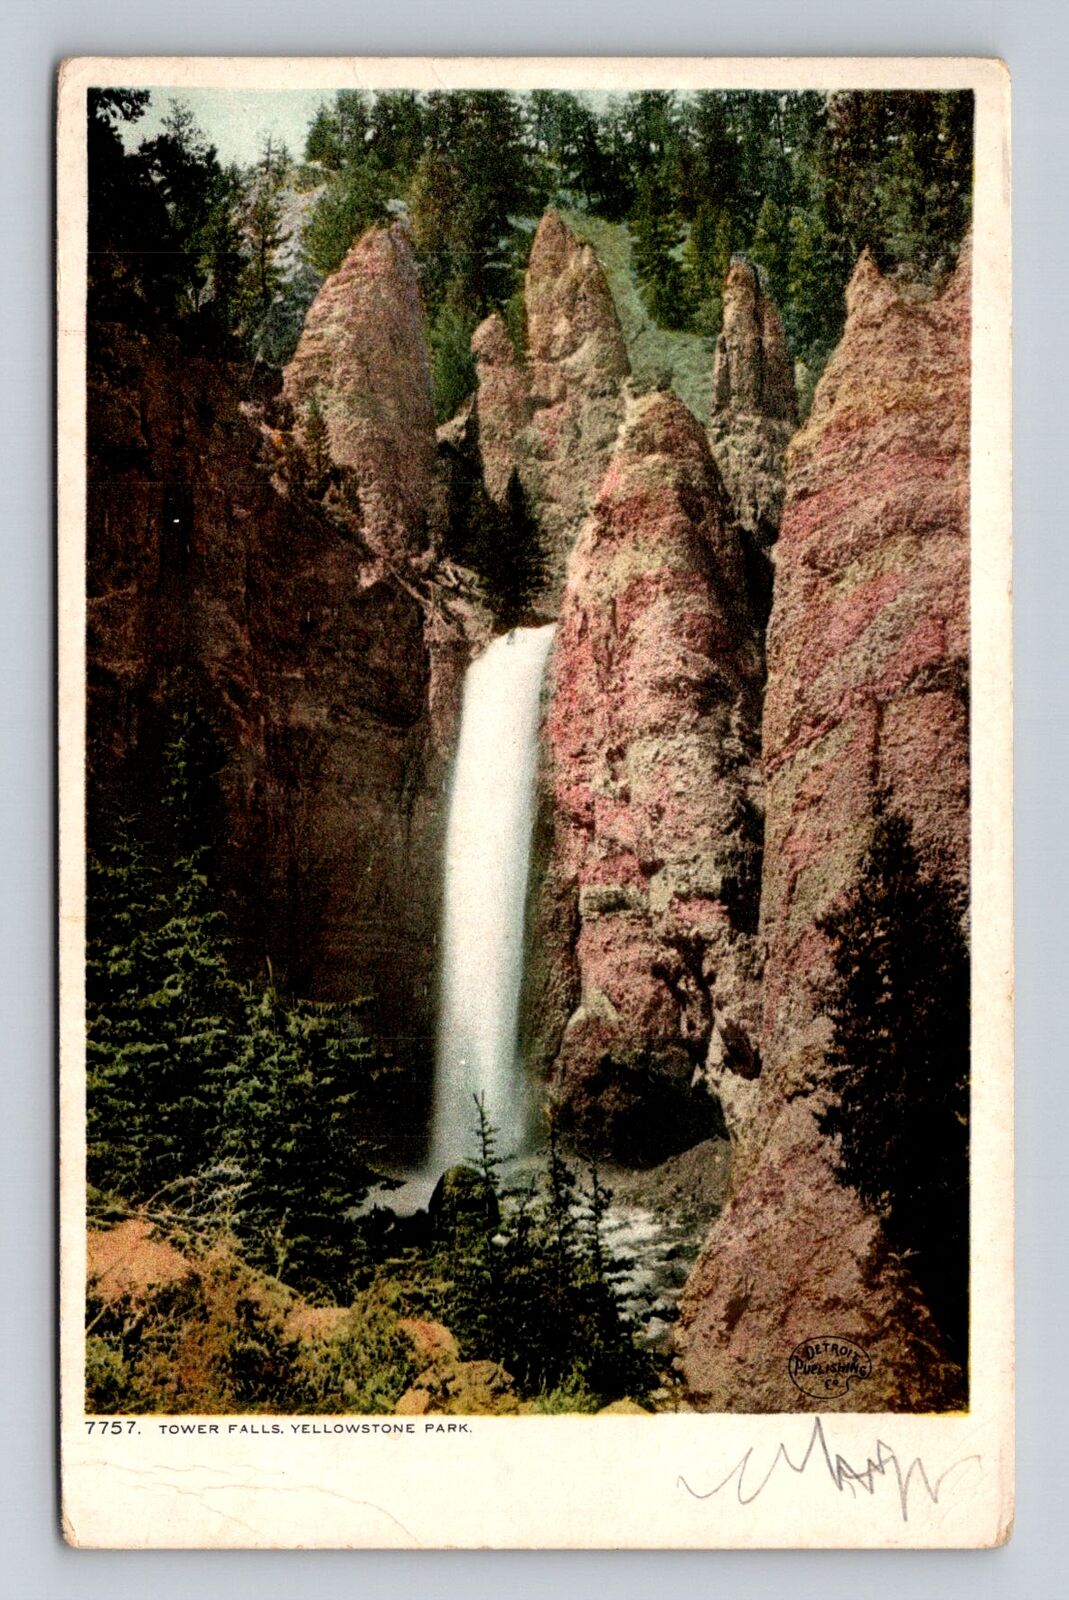 Yellowstone National Park, Tower Falls, Series #7757 Vintage Souvenir Postcard